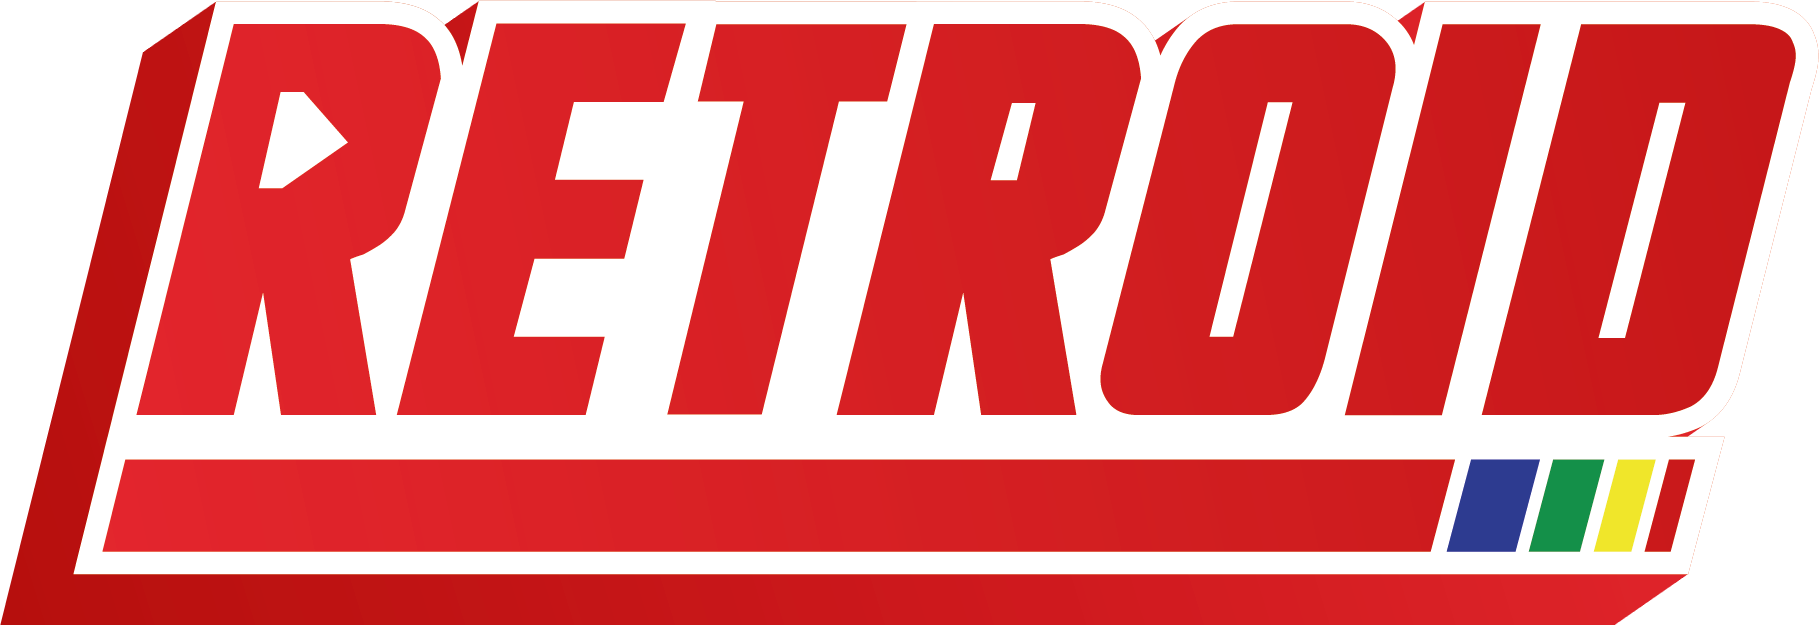 Retroid logo